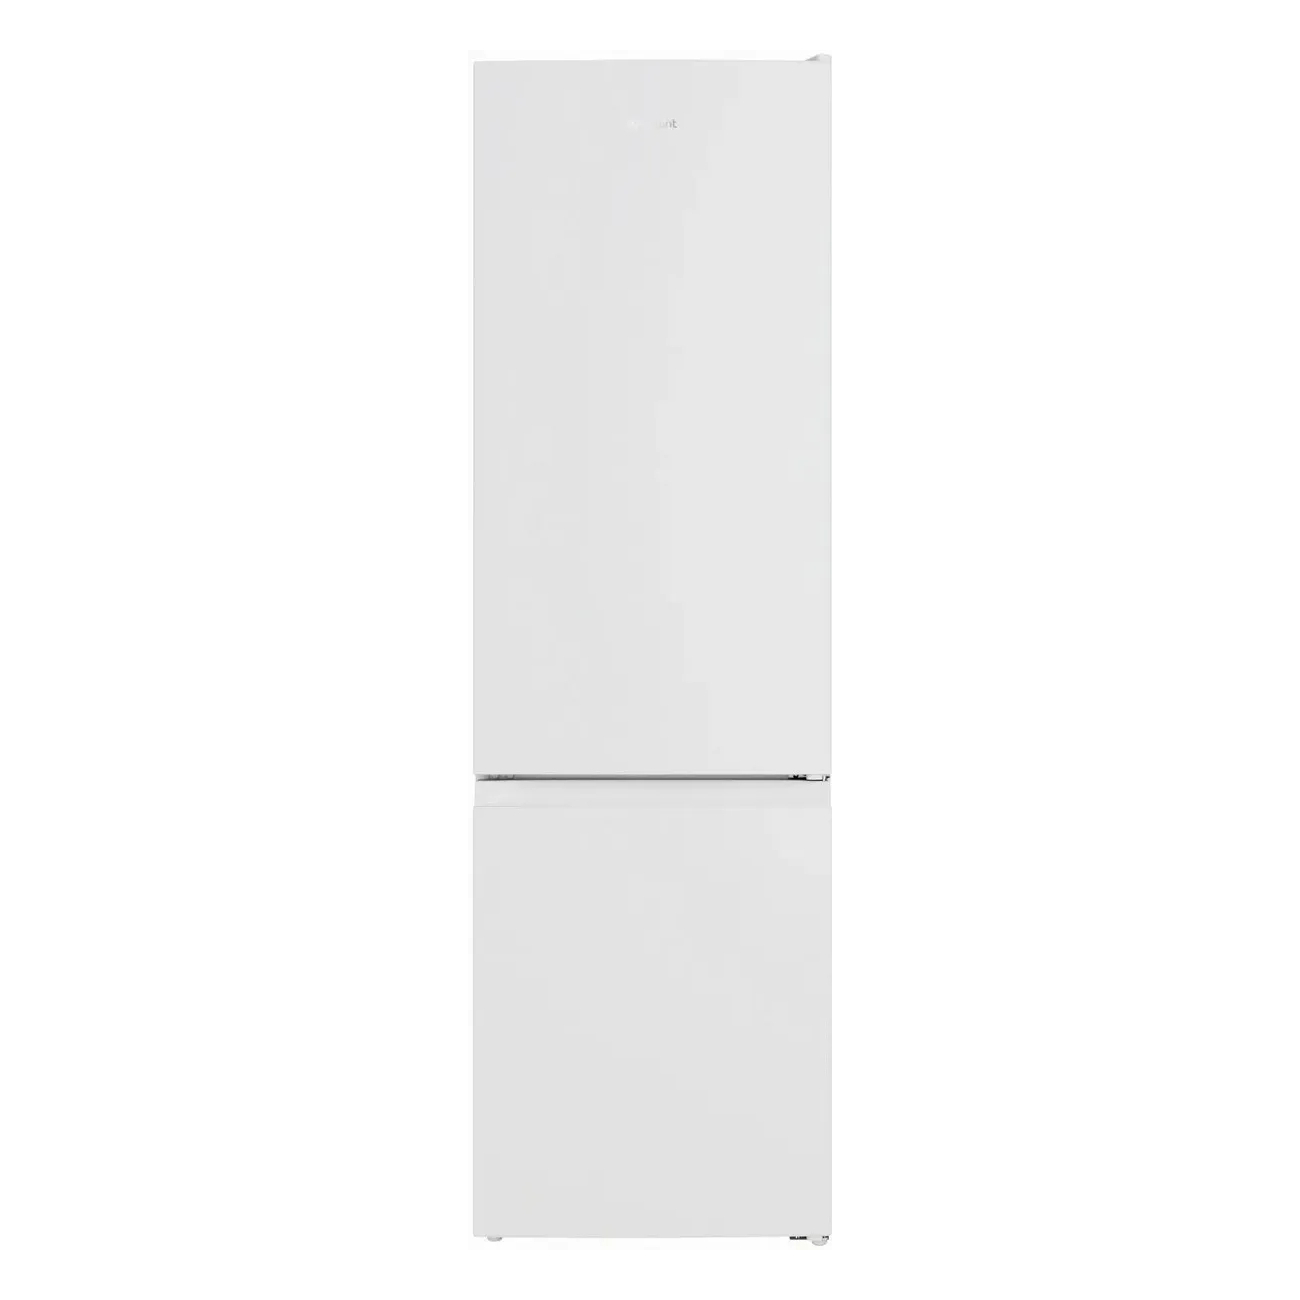 Холодильник HotPoint HT 4200 W белый холодильник hotpoint ht 5200 w белый